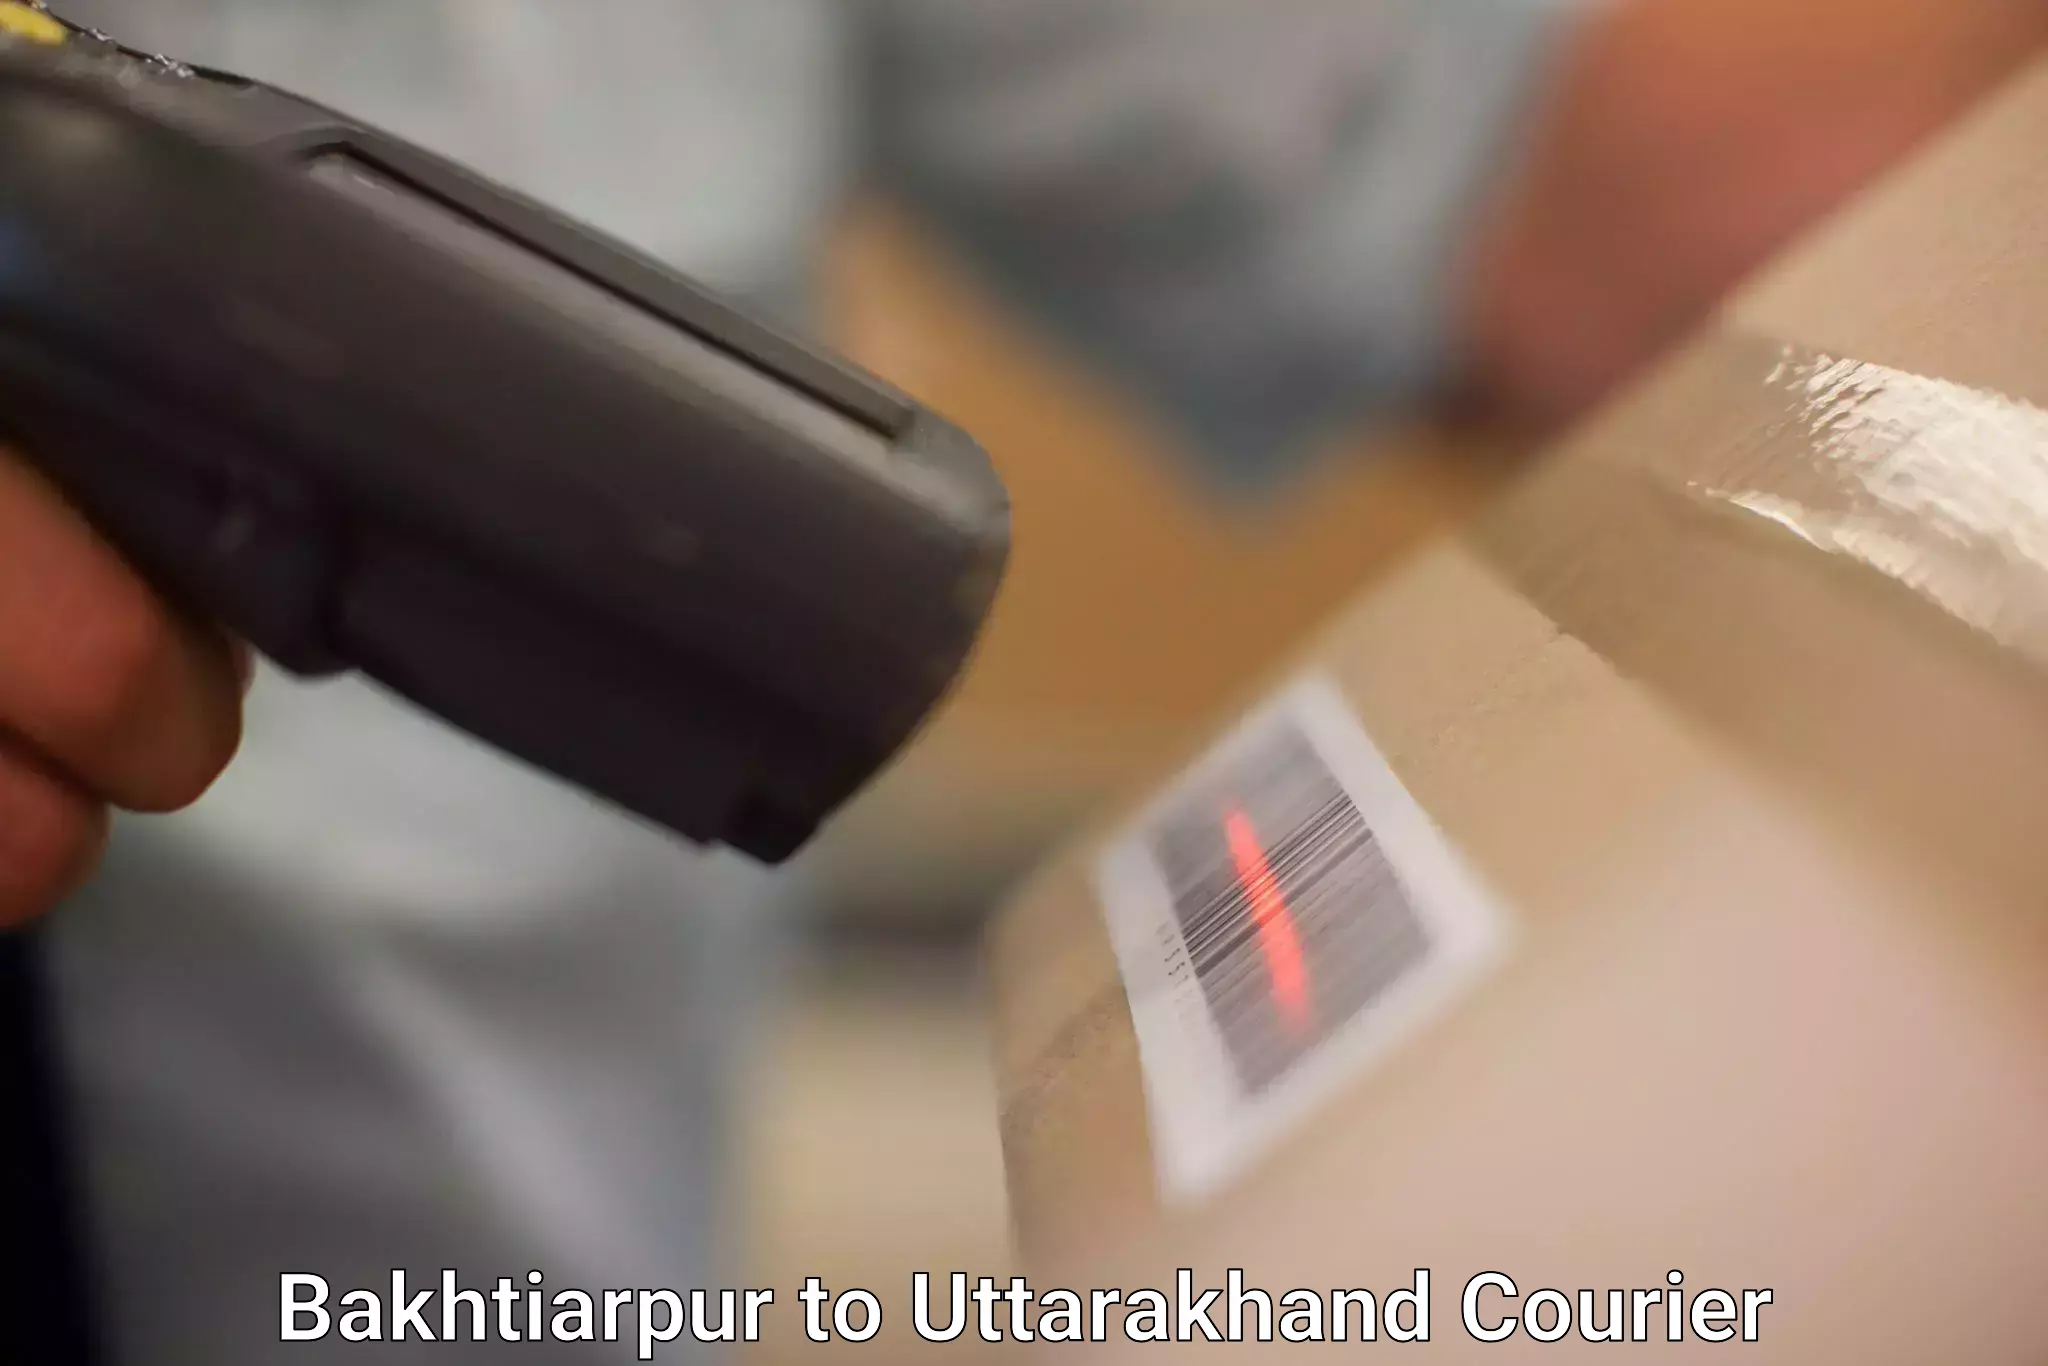 Secure packaging in Bakhtiarpur to Rishikesh